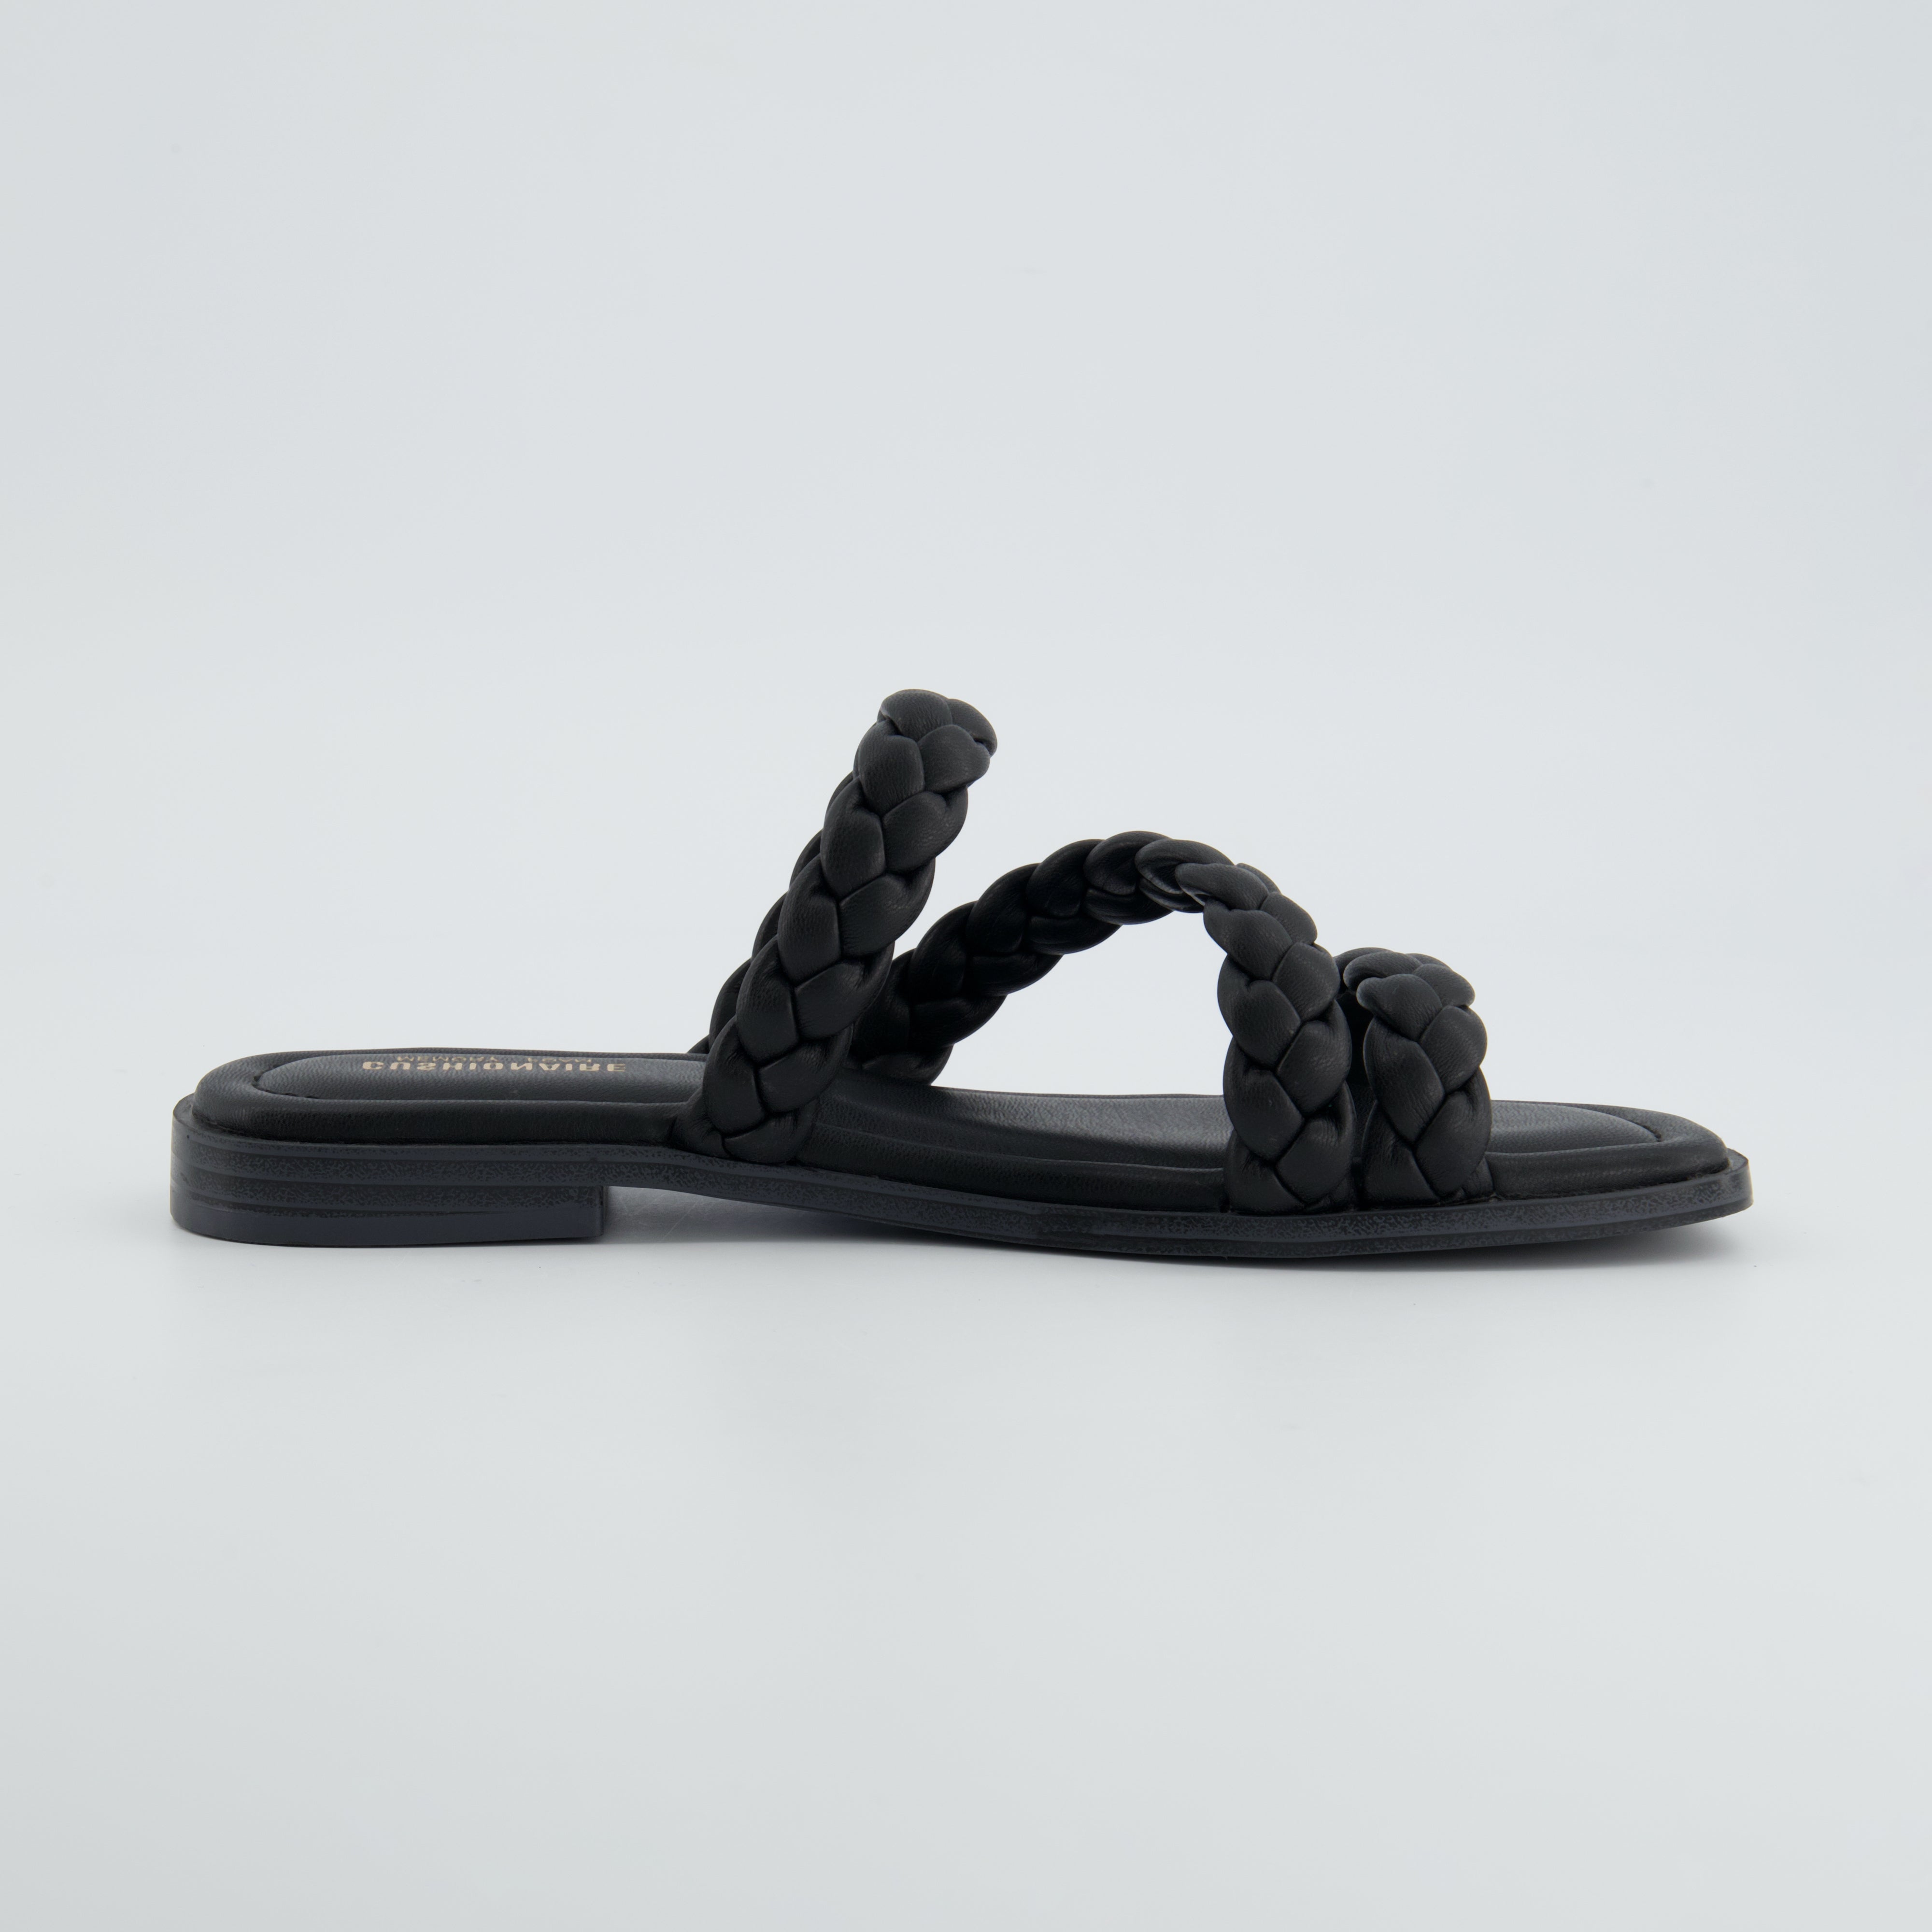 Venice Braided Slide Sandals